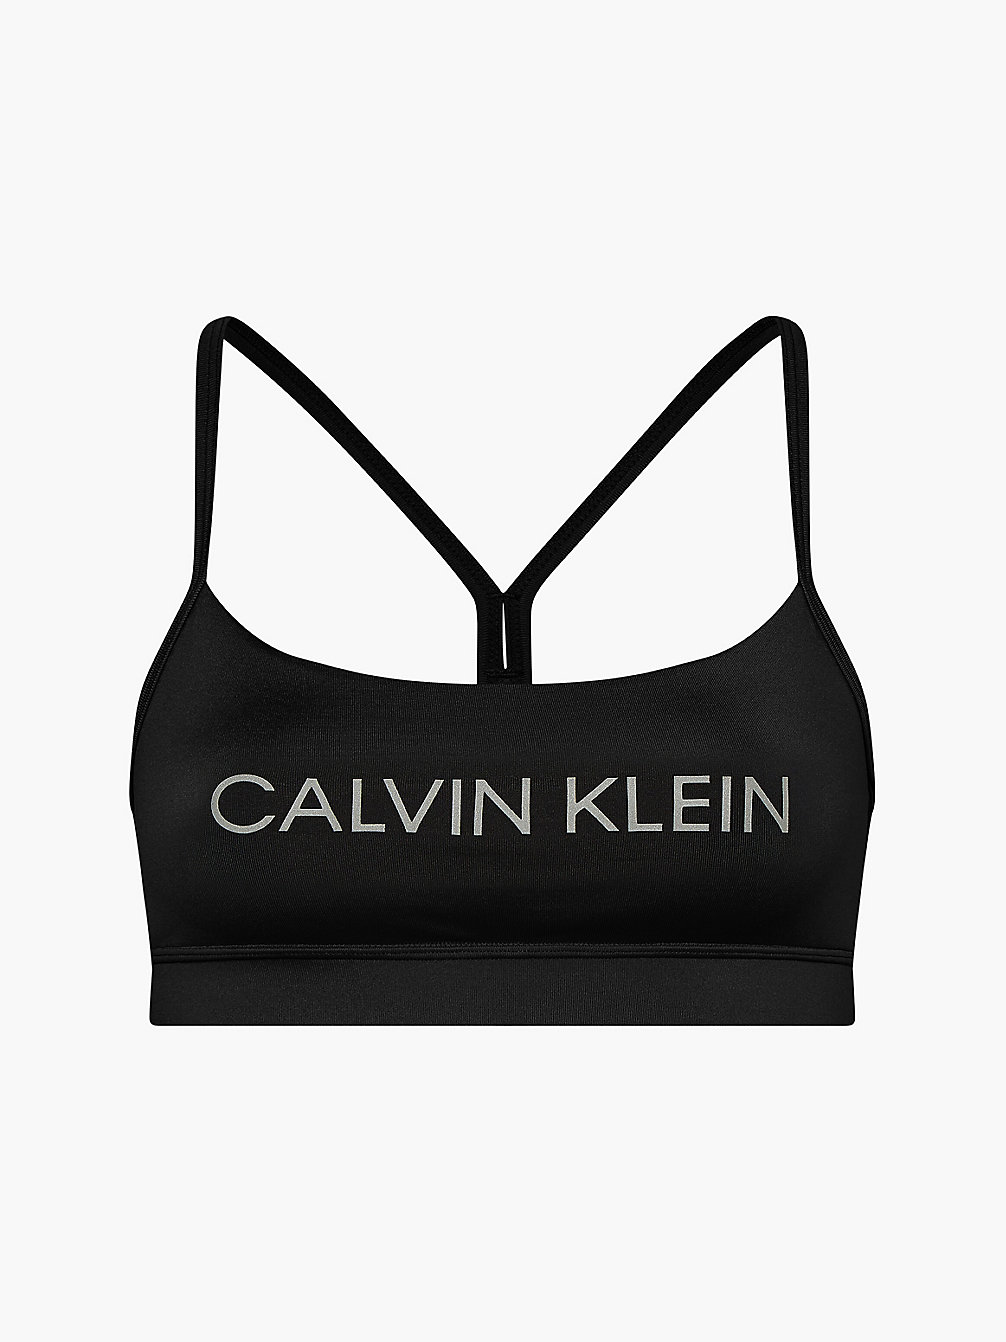 CK BLACK/REFLECTIVE SILVER > Бюстгальтер для низкоинтенсивных тренировок > undefined Женщины - Calvin Klein